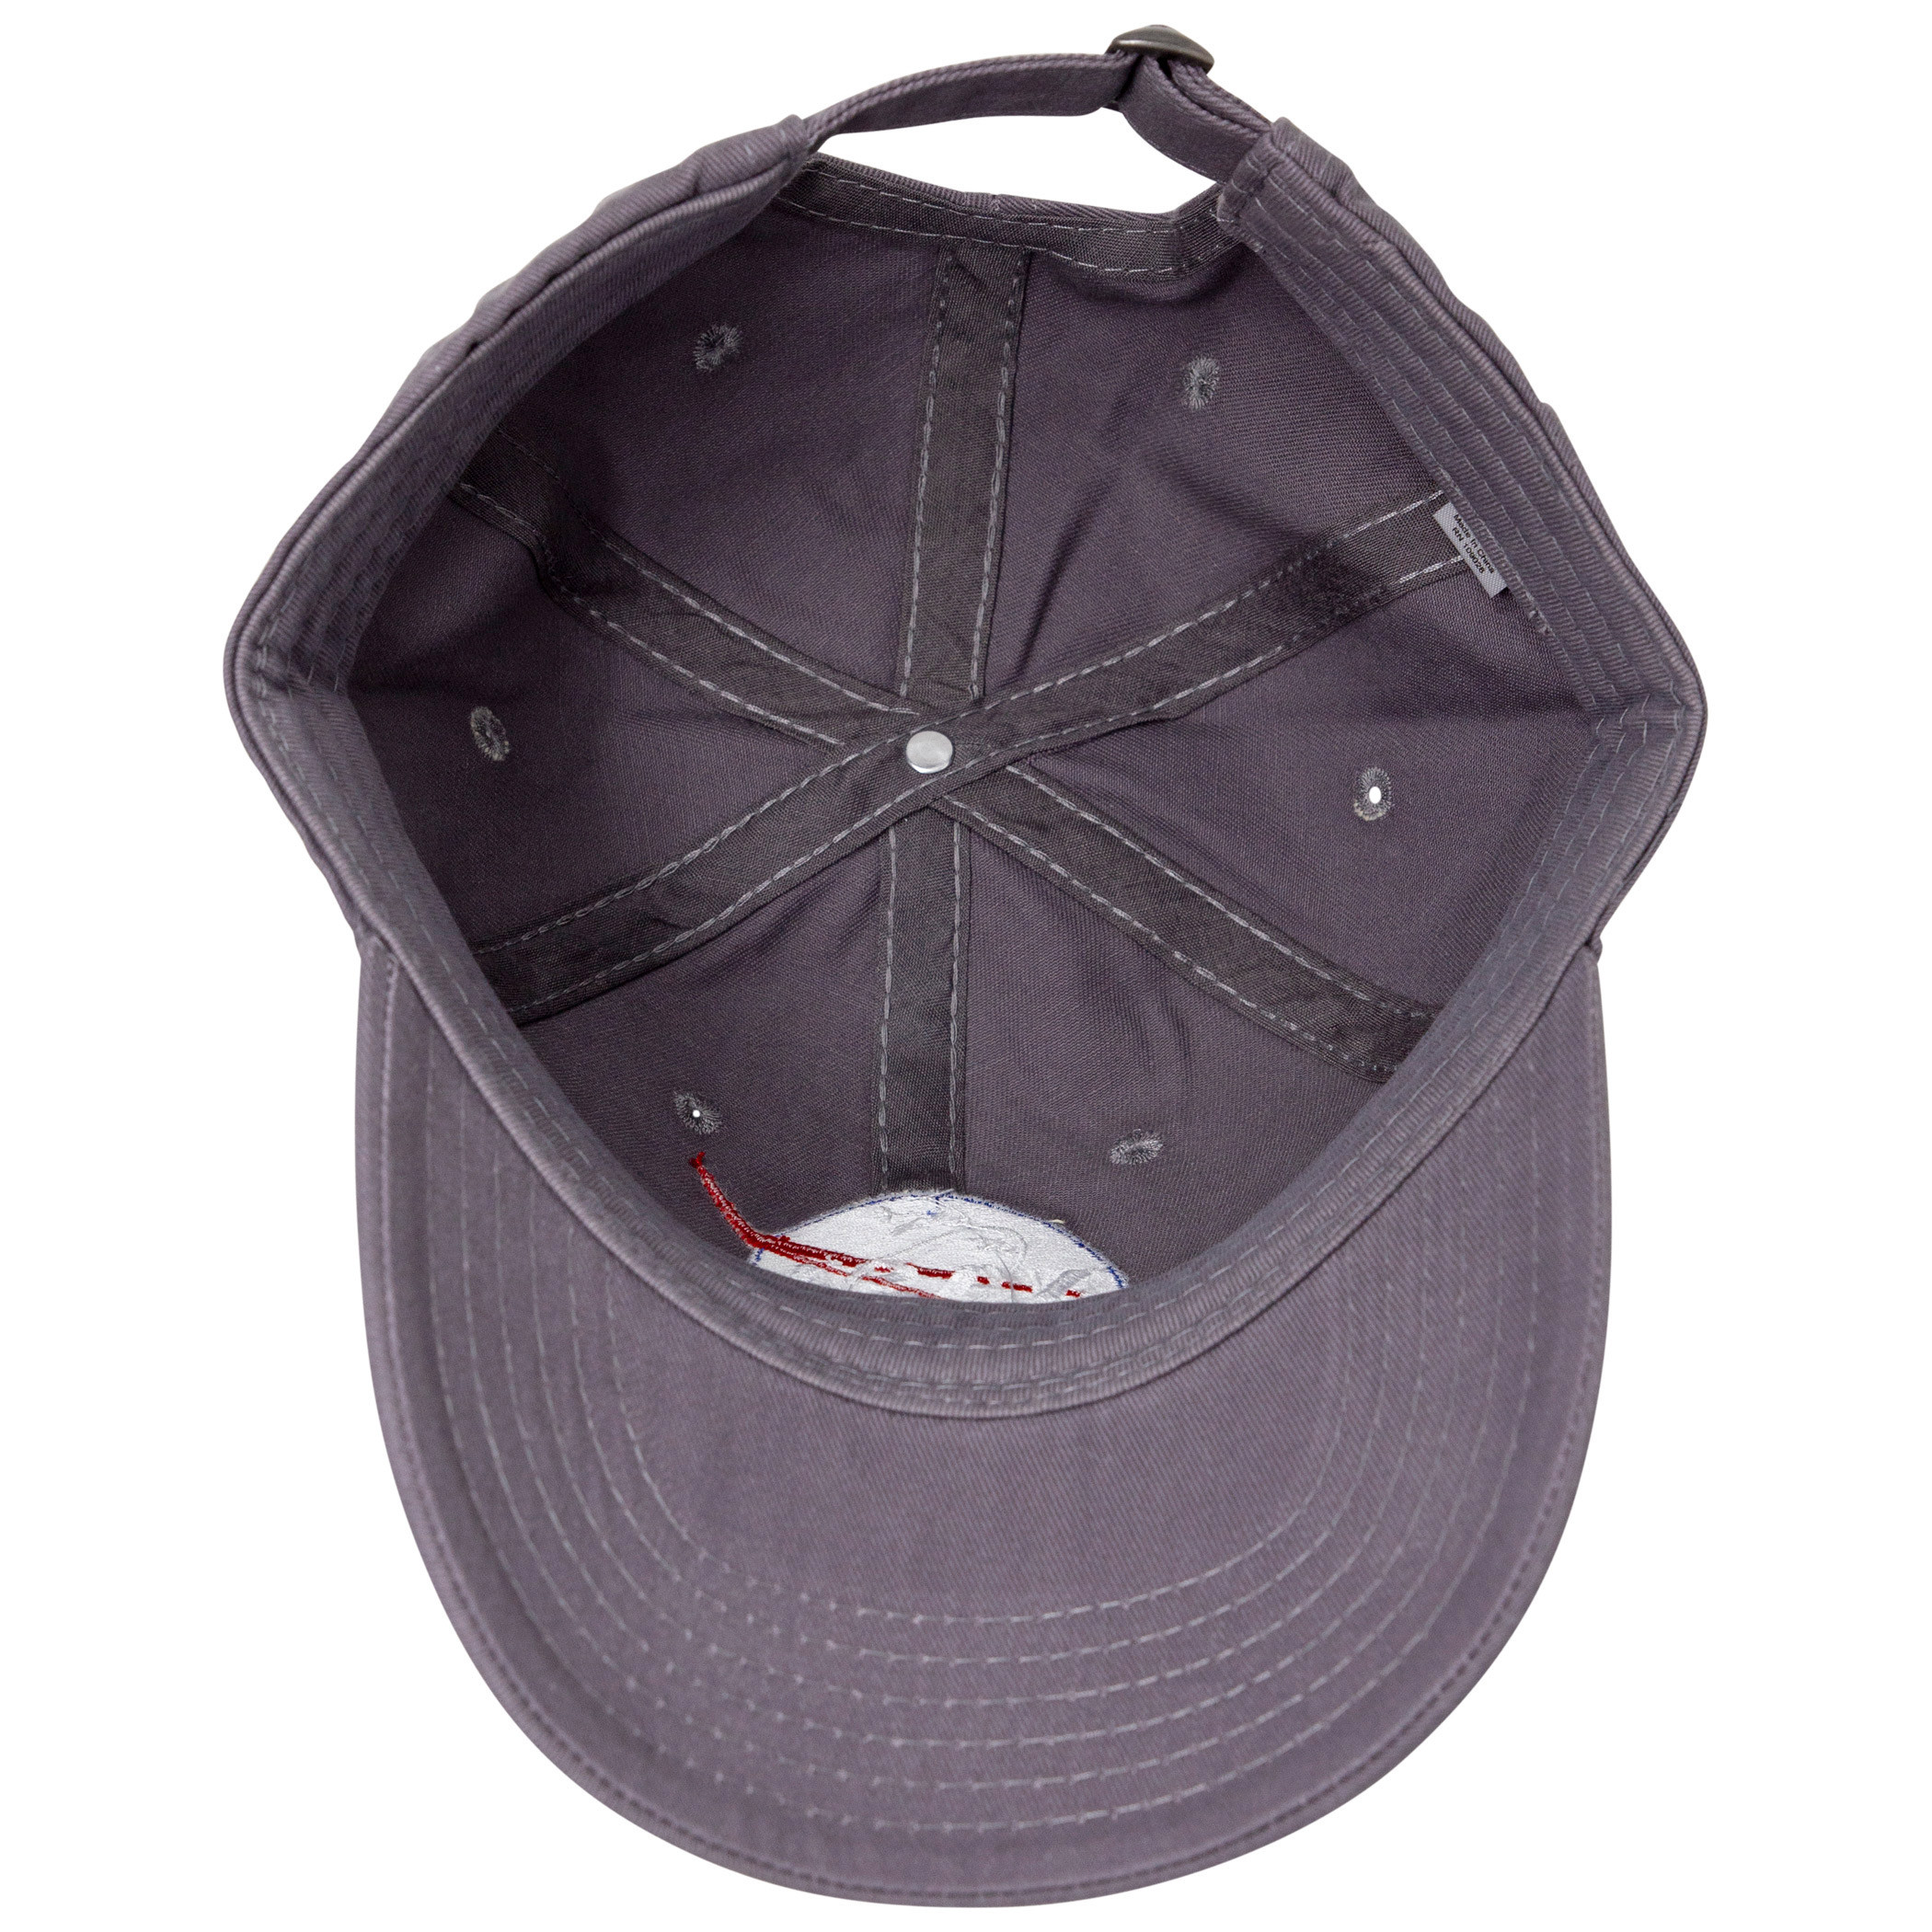 NASA Logo Grey Hat